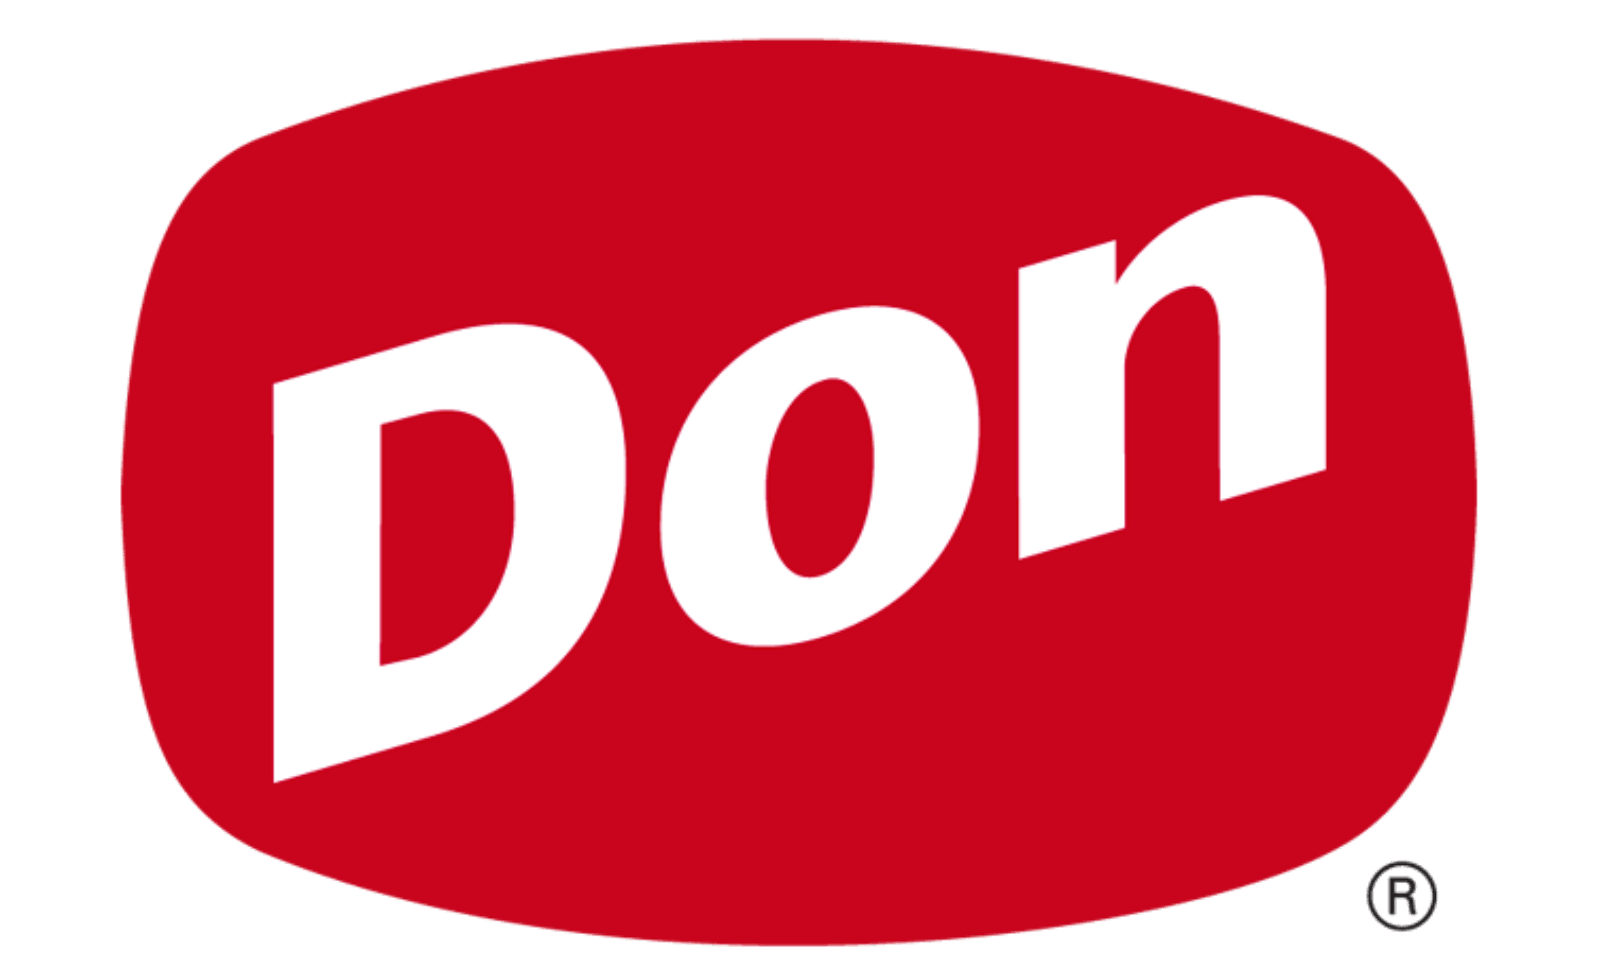 Don